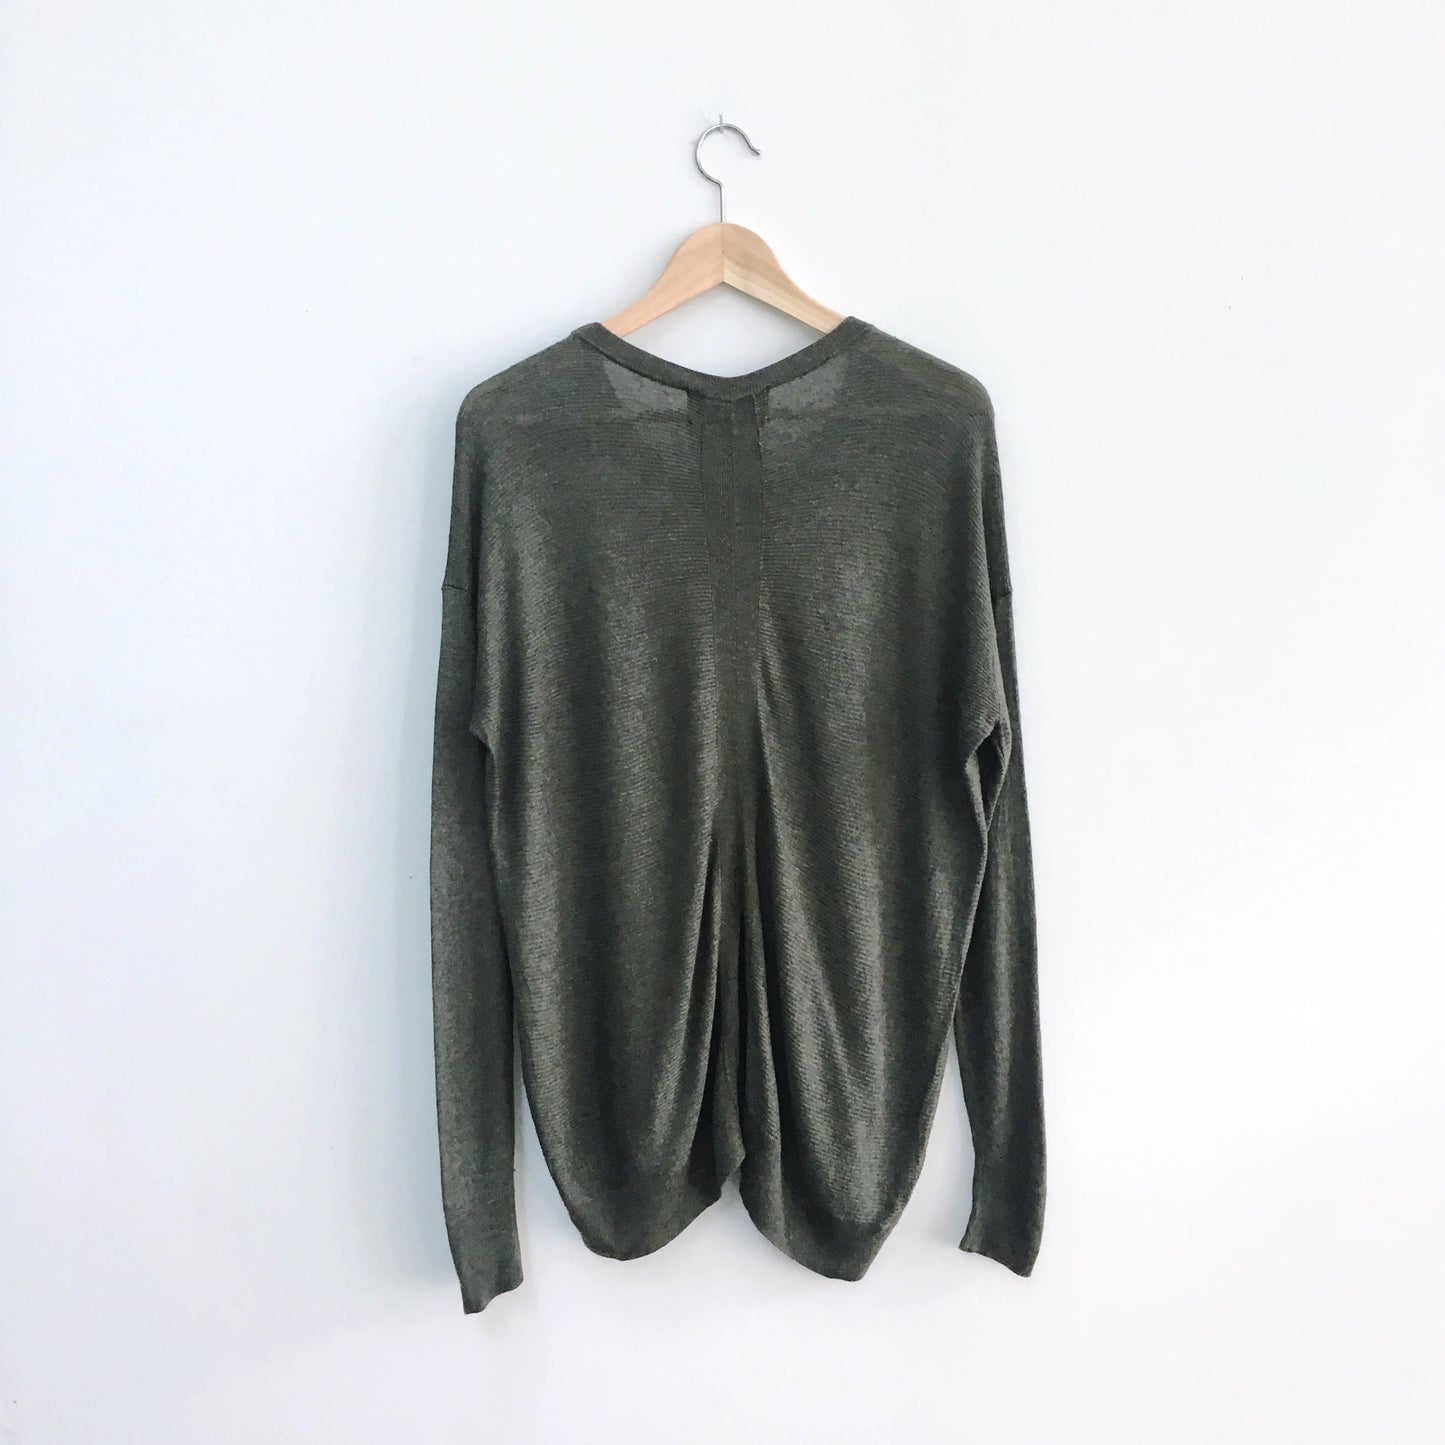 LINE Cashmere Blend Sweater - size Medium